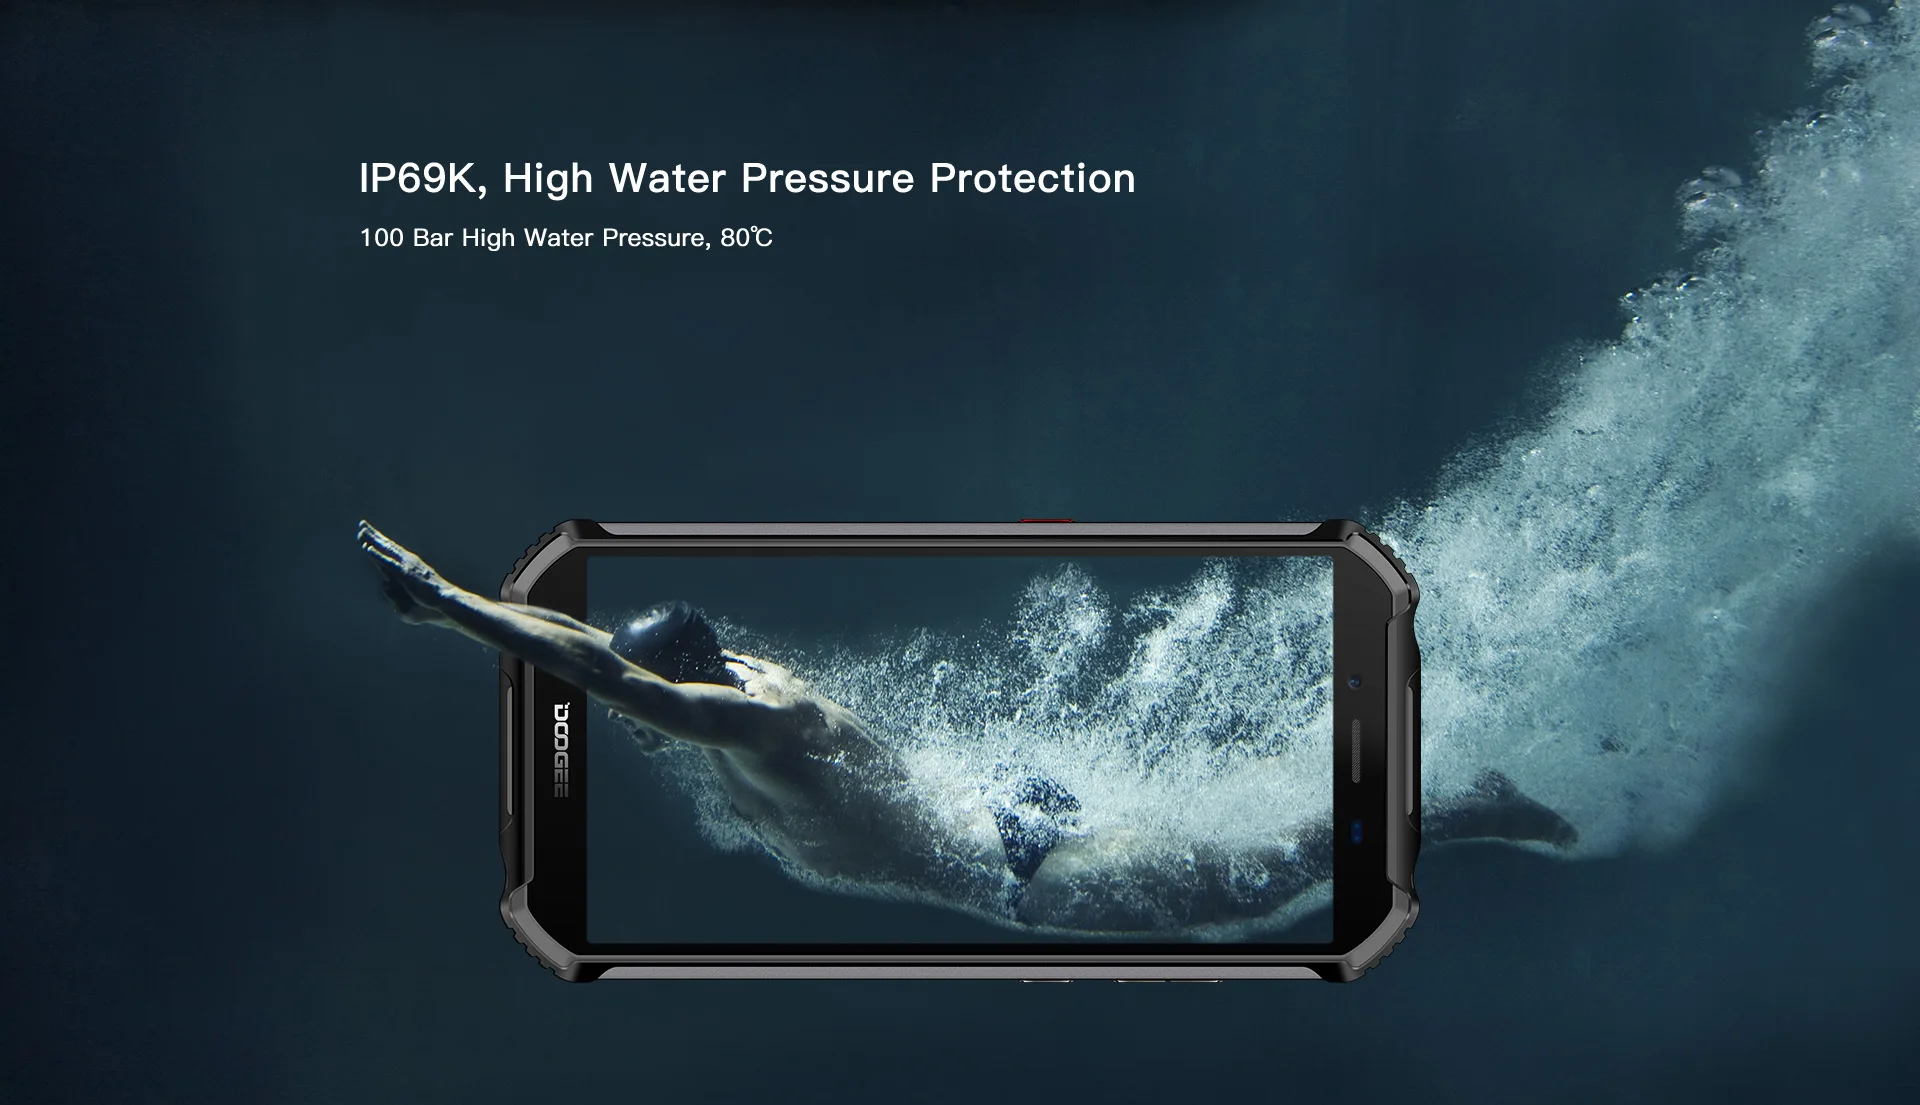 Doogee S40 Android 9,0 Pie сотовый телефон IP68 IP69K водонепроницаемый 5,5 "4650 мАч распознавание лица отпечаток пальца разблокировка 4G LTE NFC Смартфон